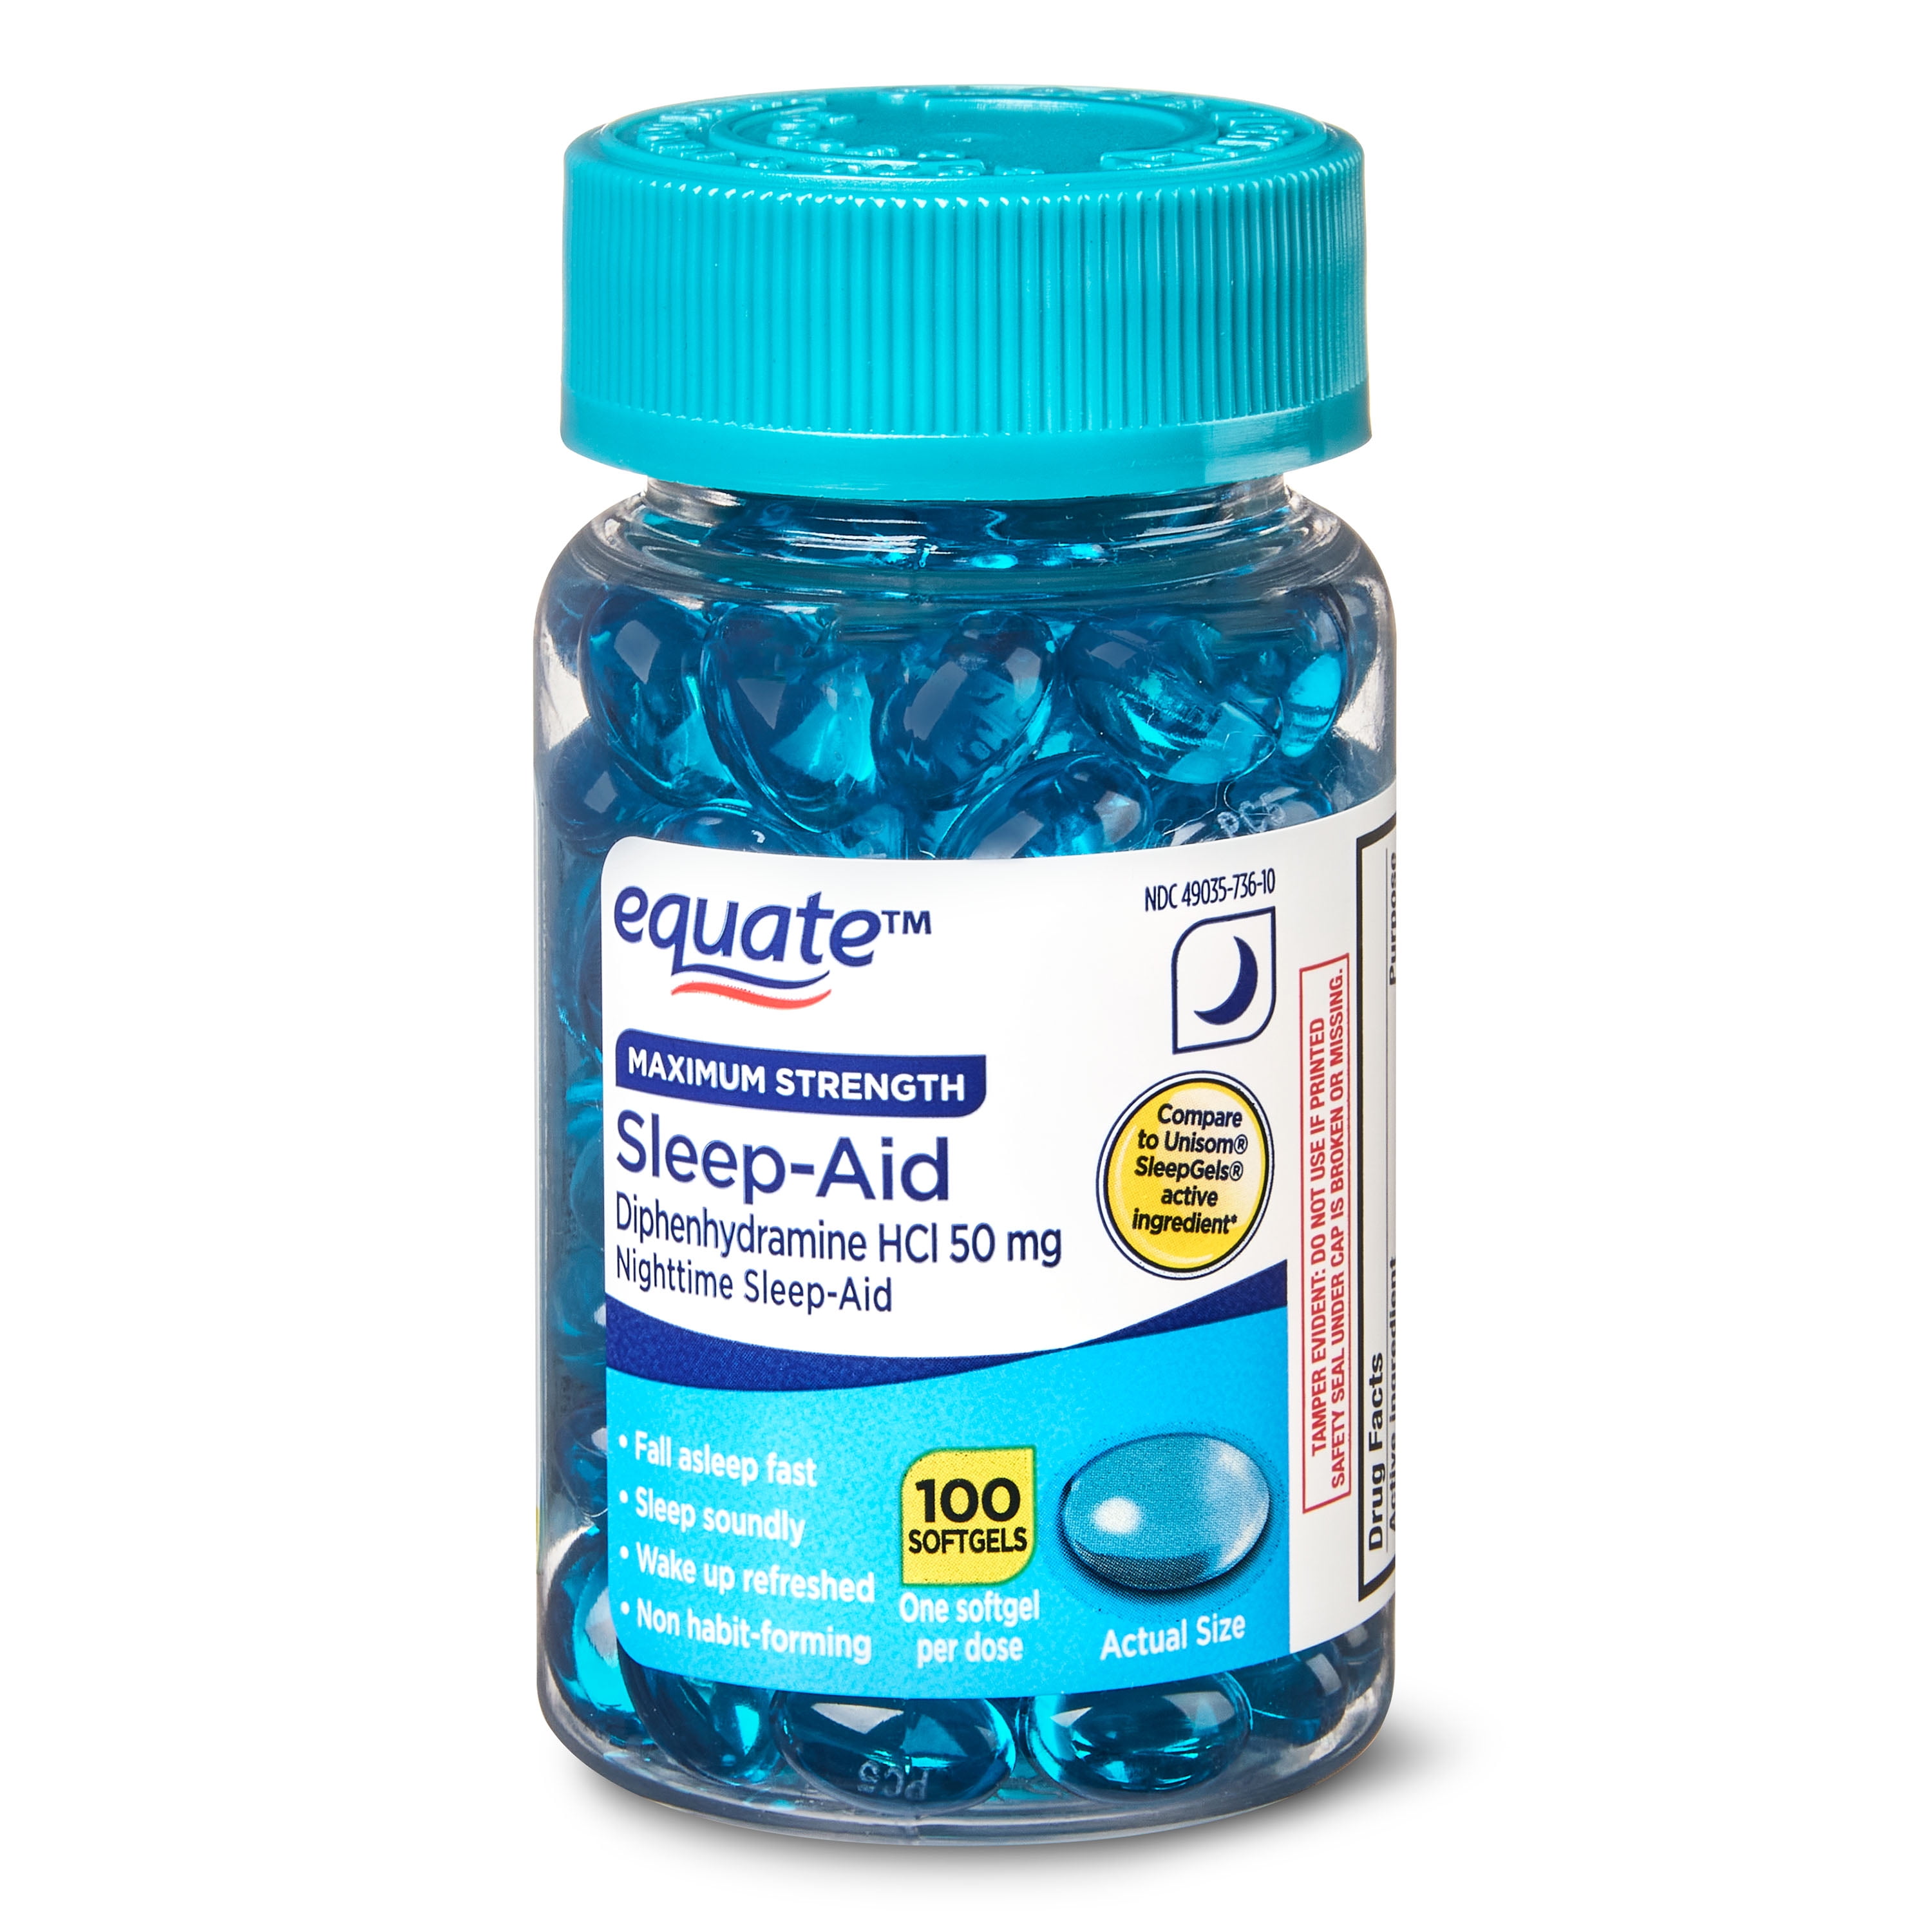 Equate Maximum Strength Diphenhydramine HCl Sleep-Aid Softgels, 50 mg, 100 Count